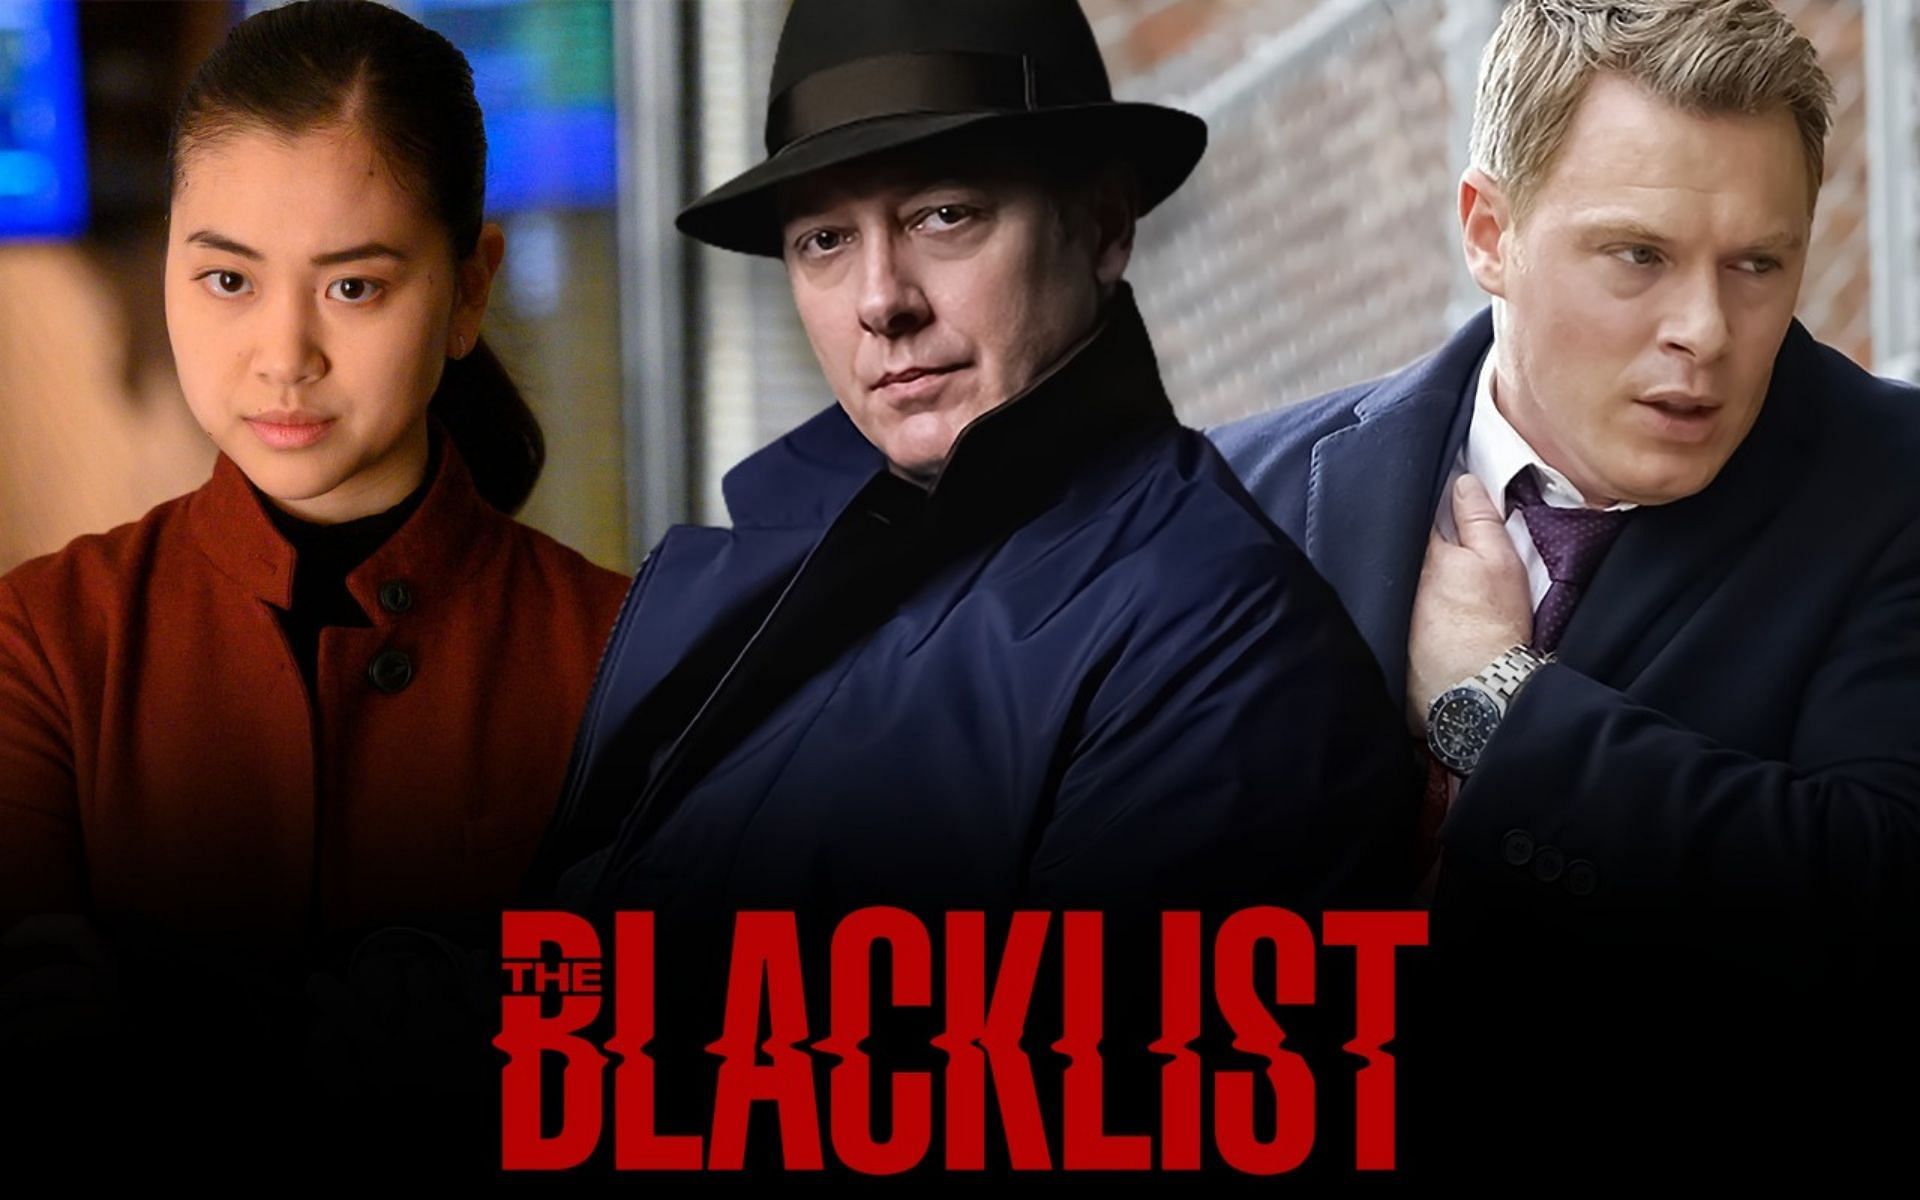 The blacklist season 9